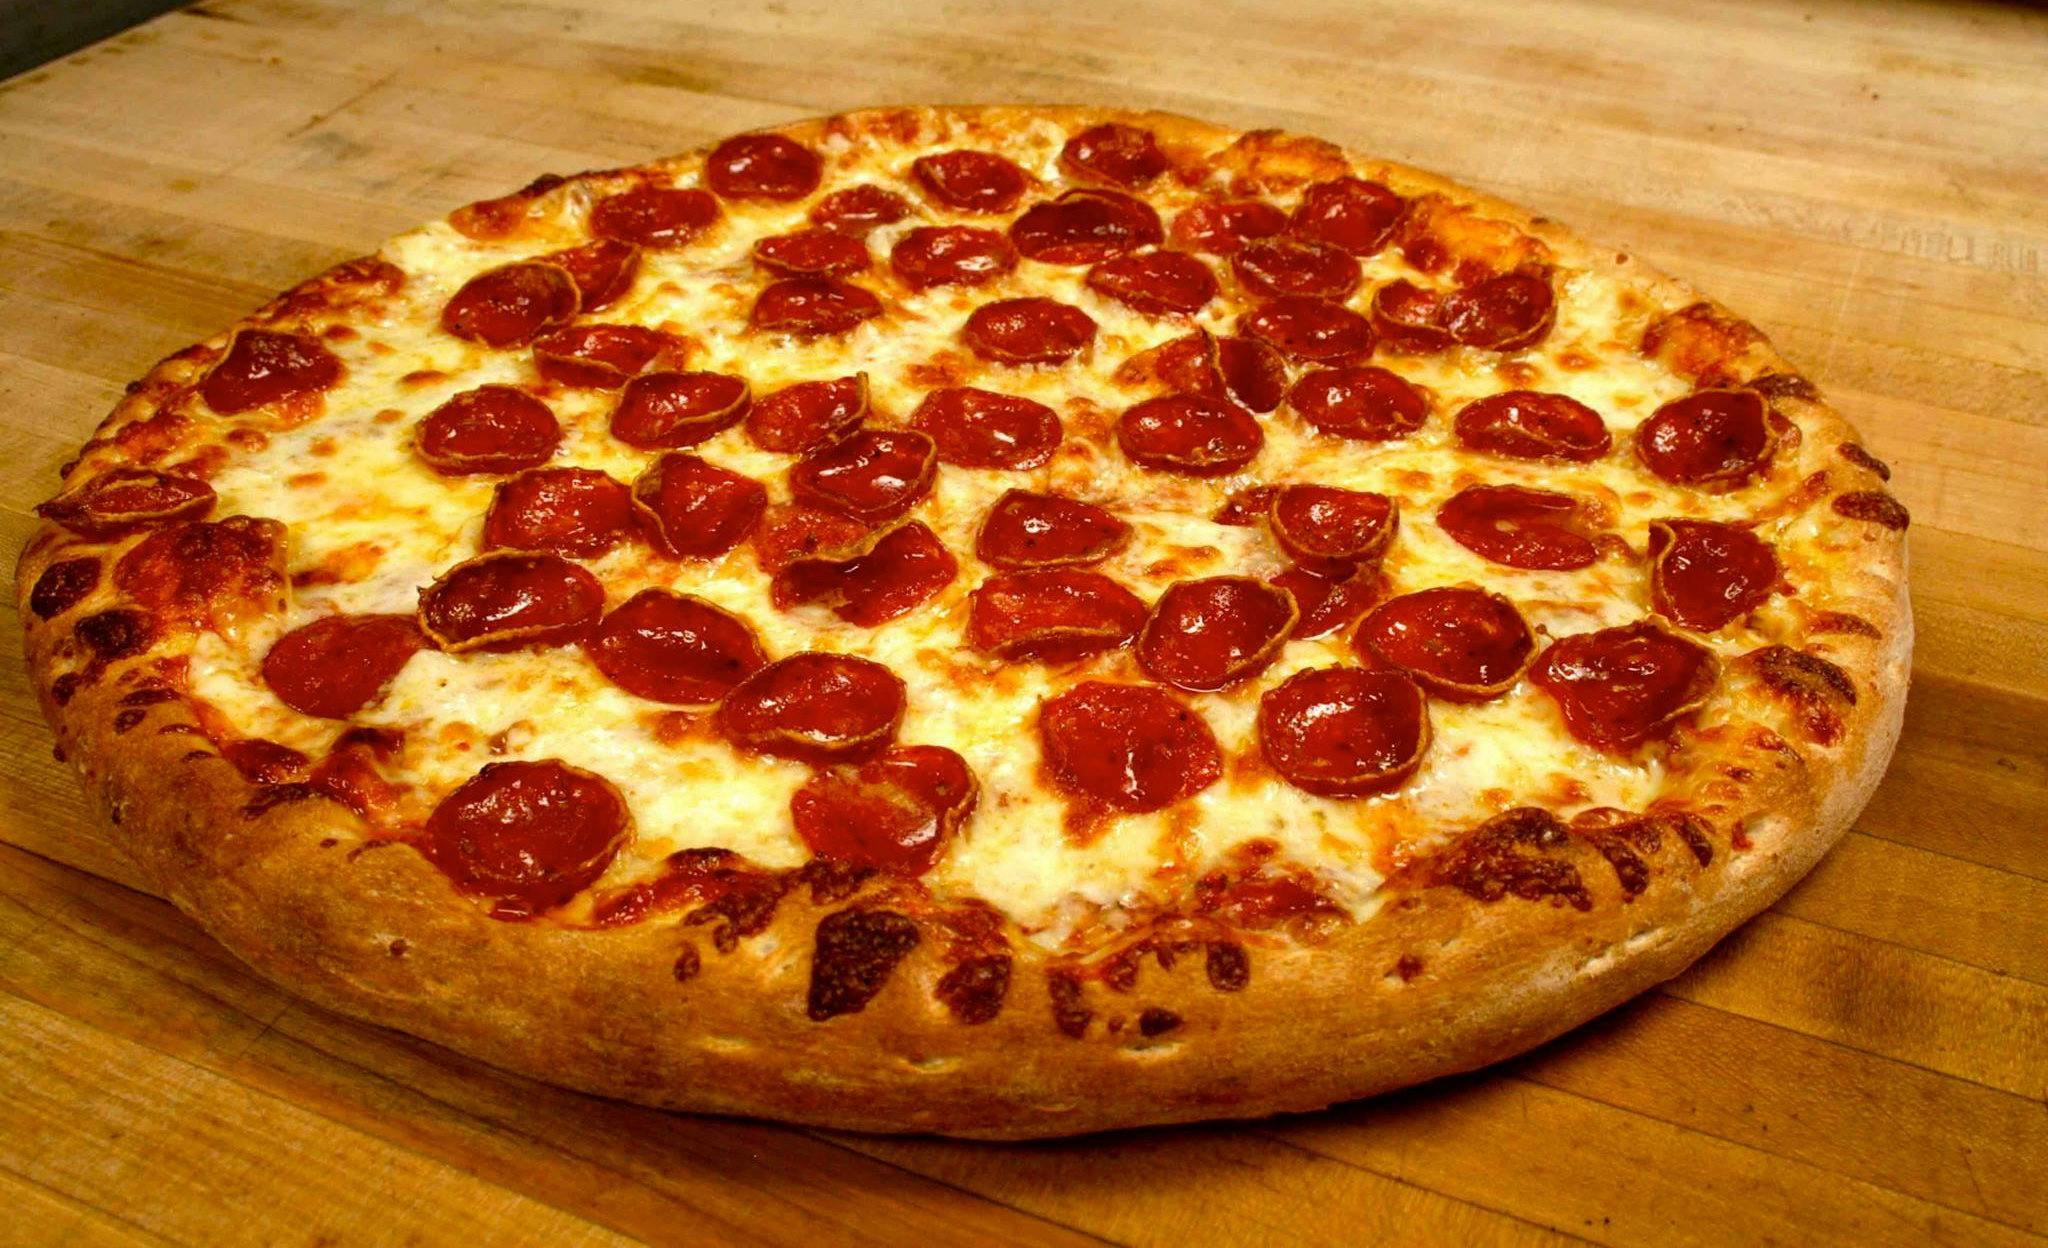 Star Pizza in Springfield - Highlight